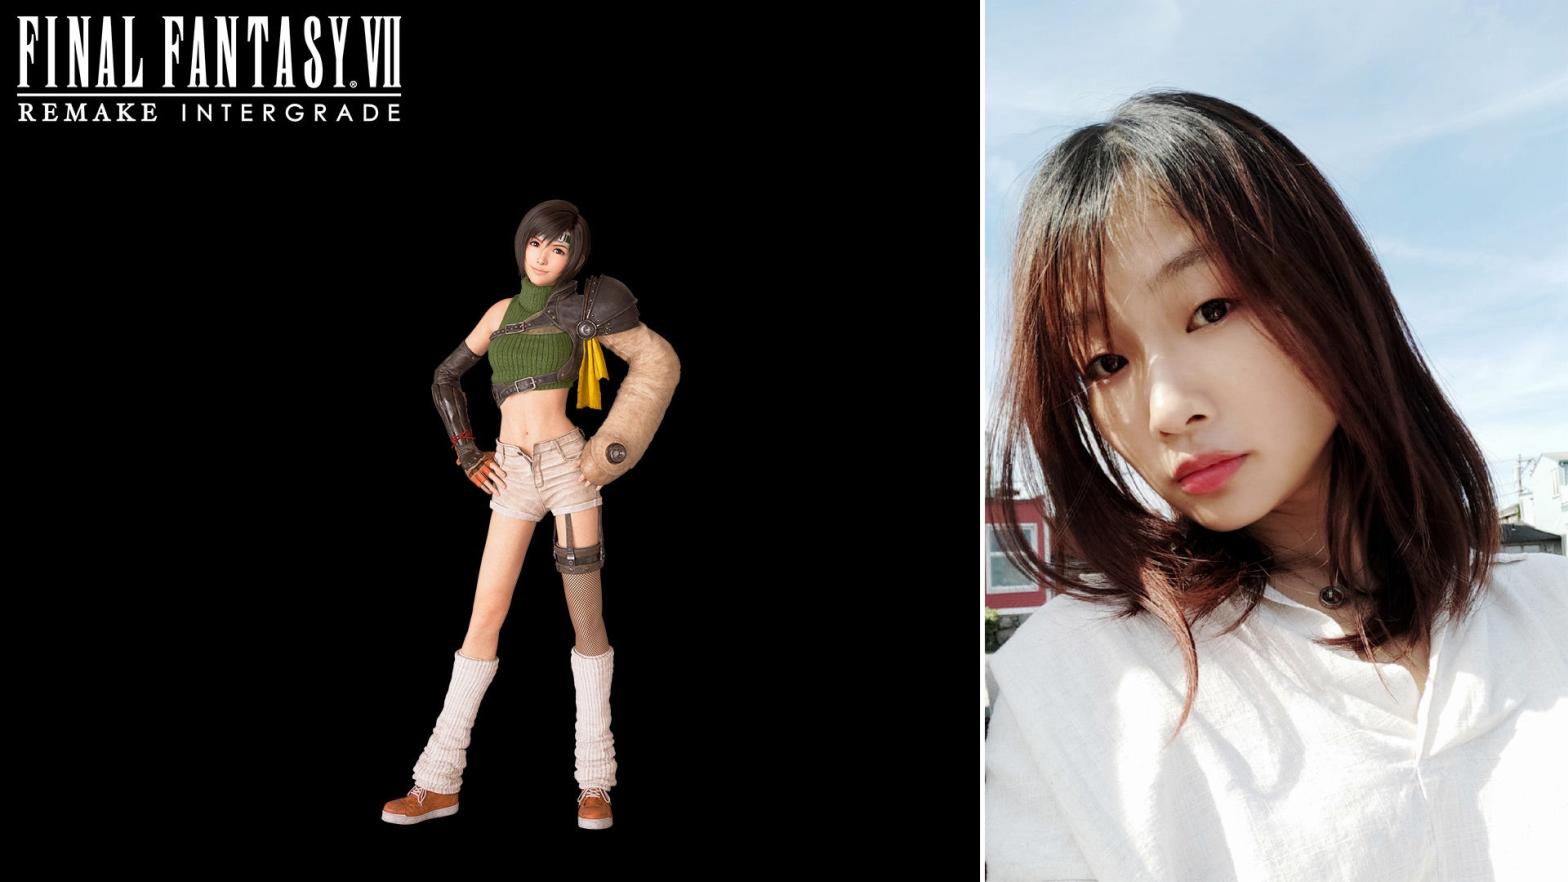 Suzie Yeung will play Yuffie Kisaragi, Final Fantasy VII's famous materia-hunting ninja, in Remake Intergrade's new episode.